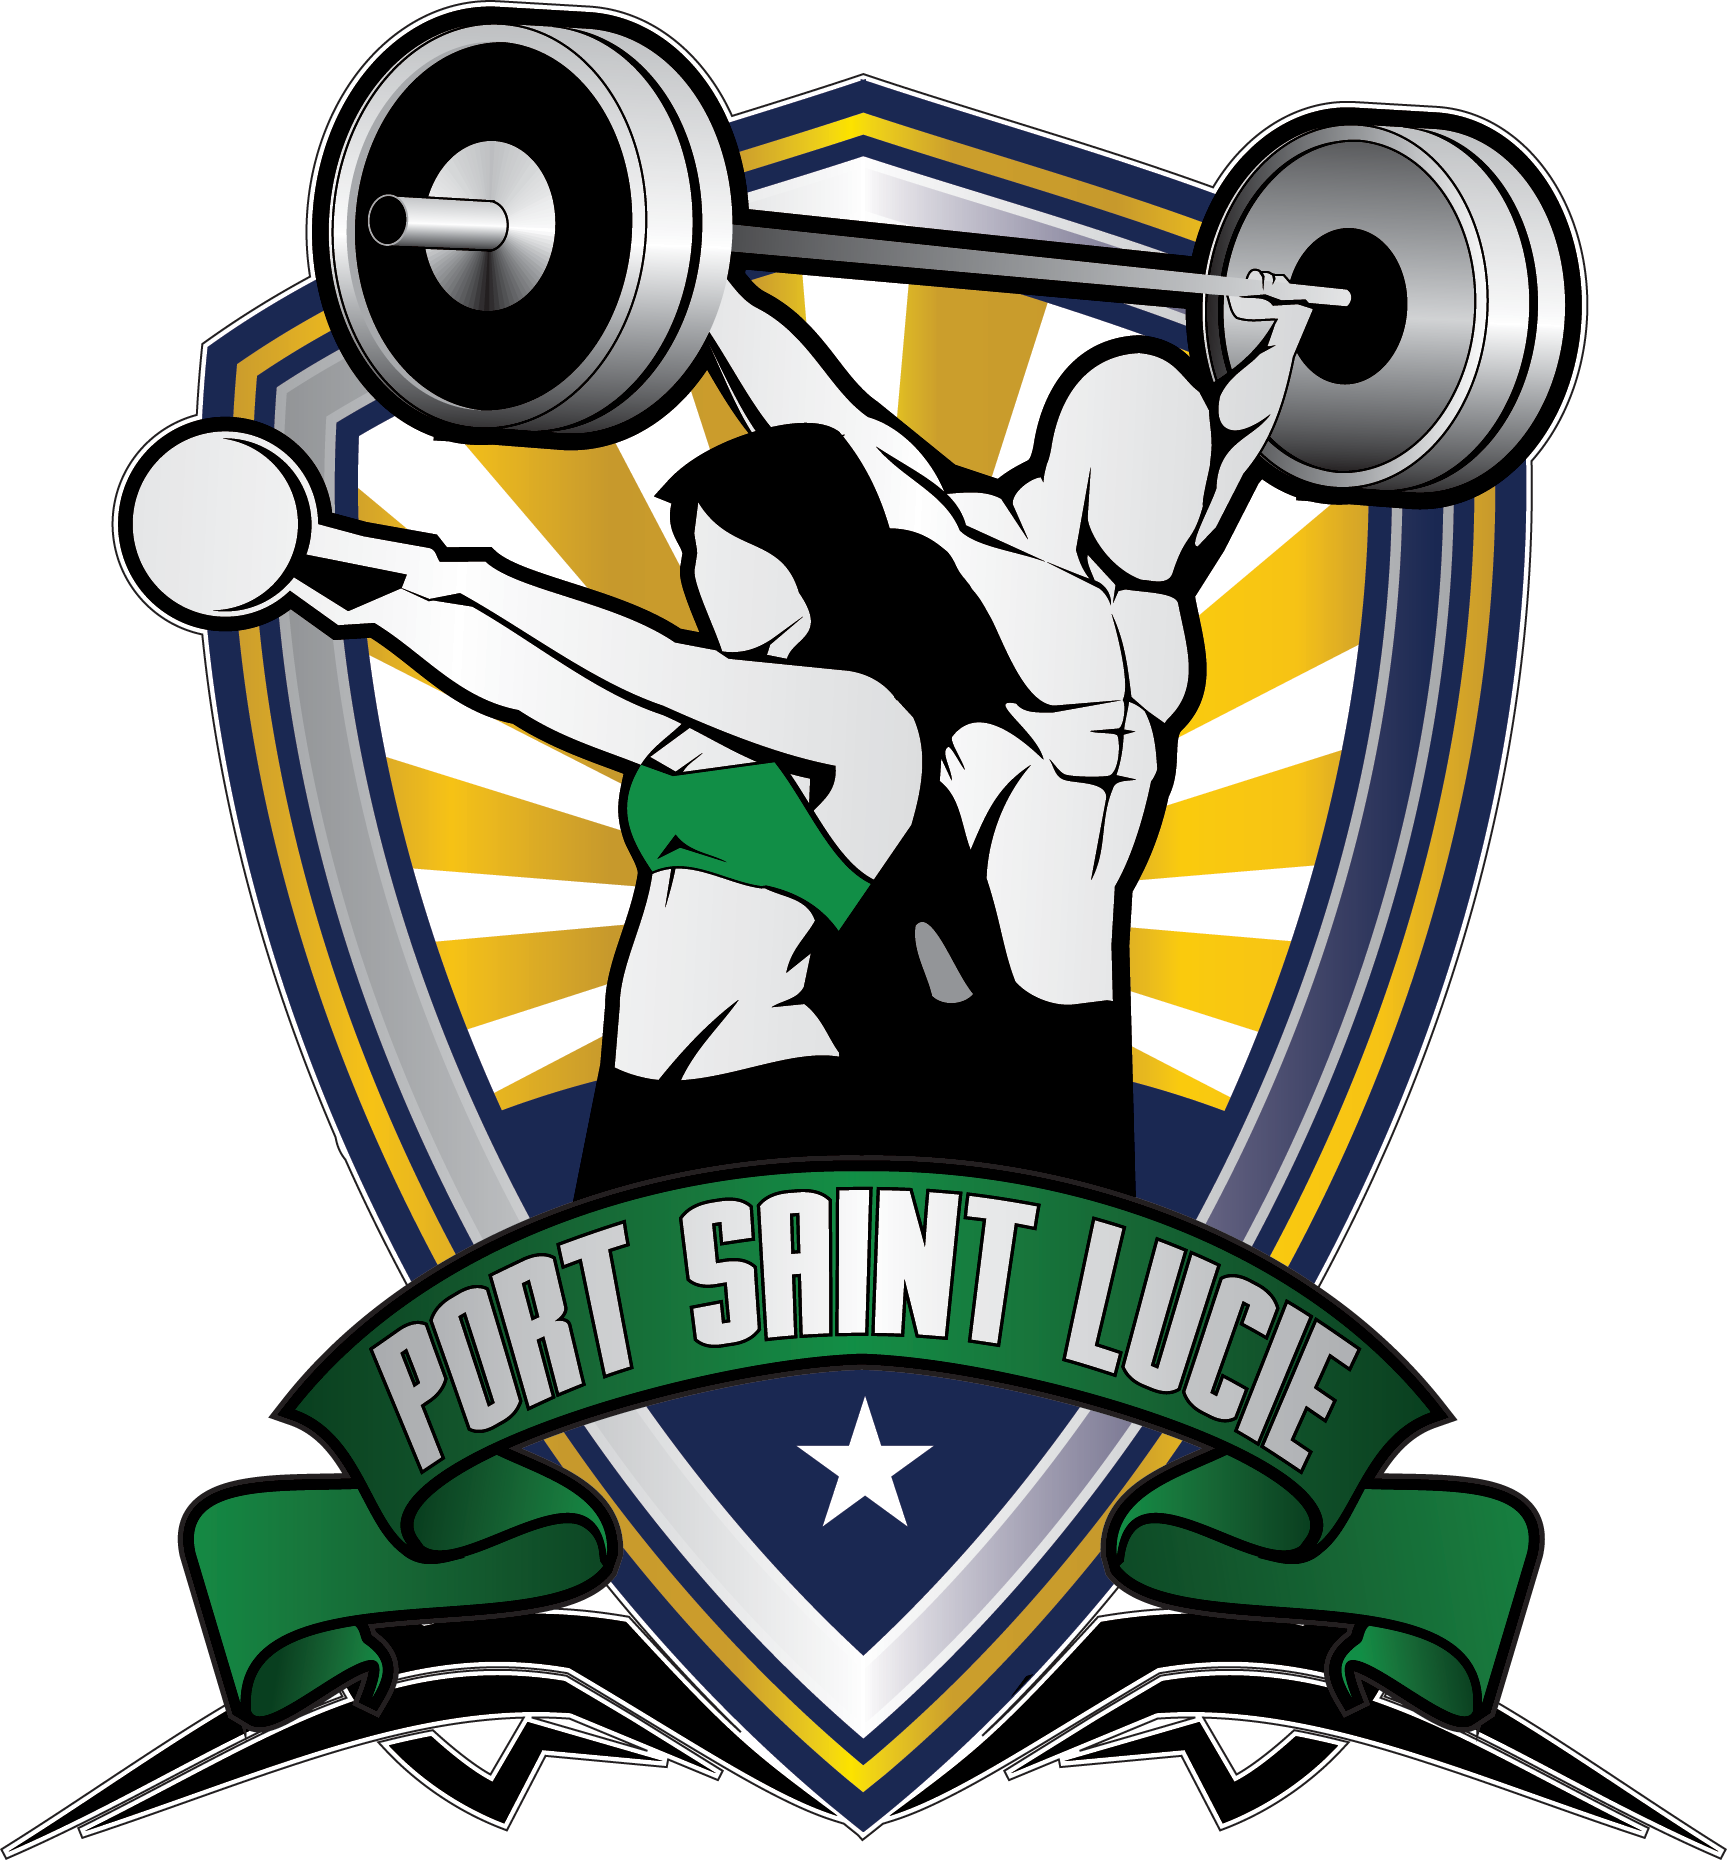 Port Saint Lucie Fitness